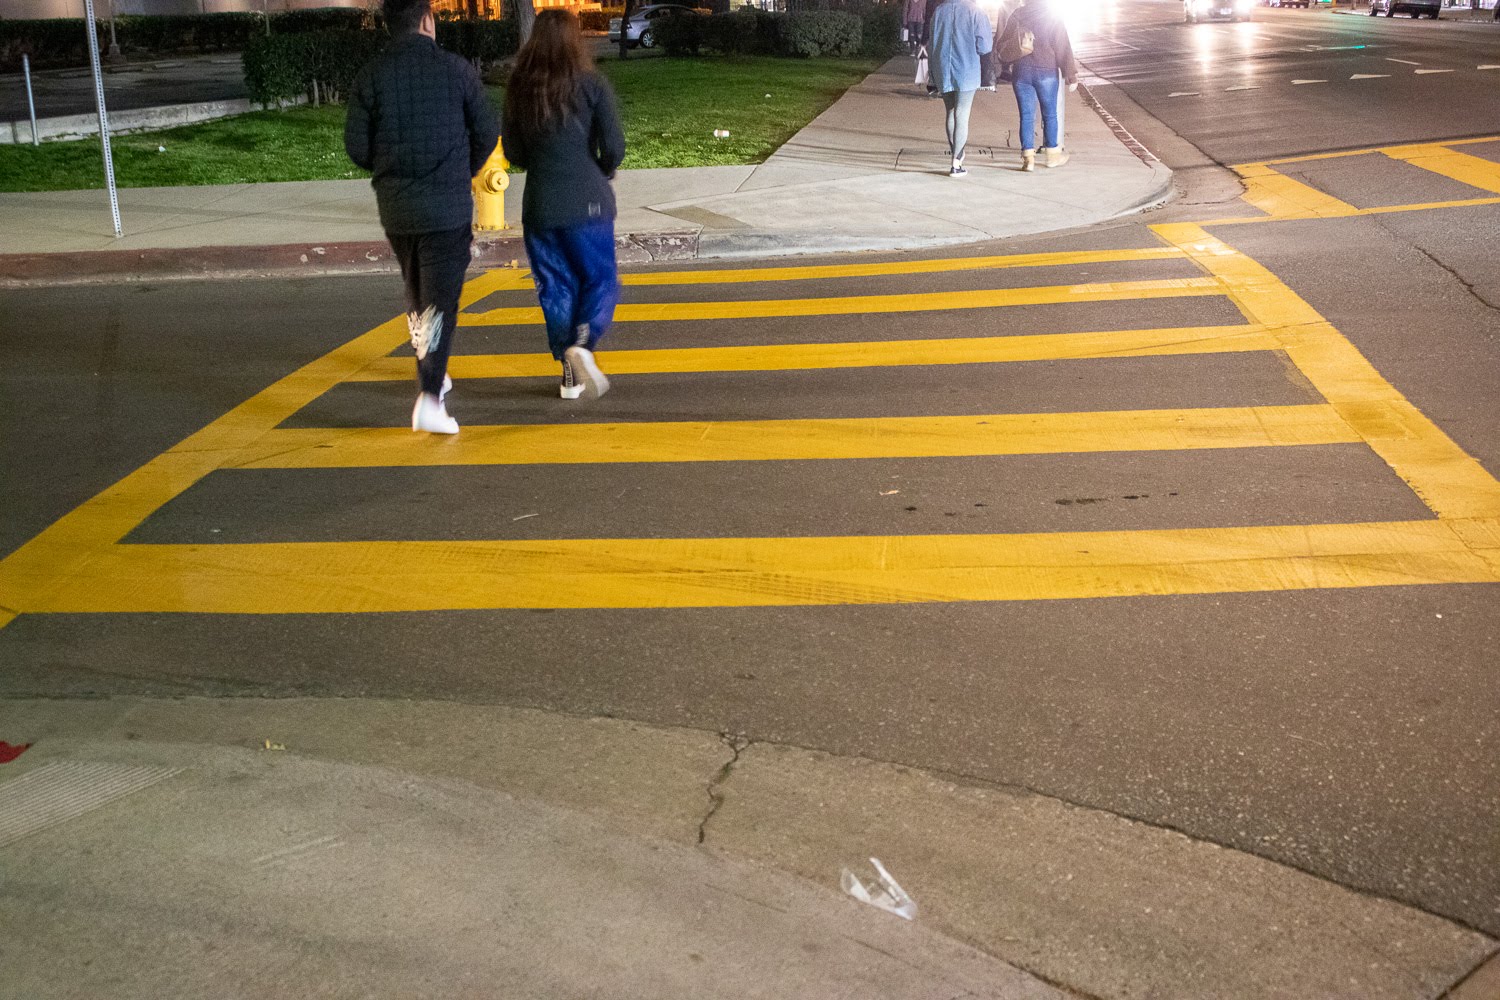 7/8 Santa Ana, CA – One Killed in Fatal Pedestrian Crash Involving Train Near Grand Ave